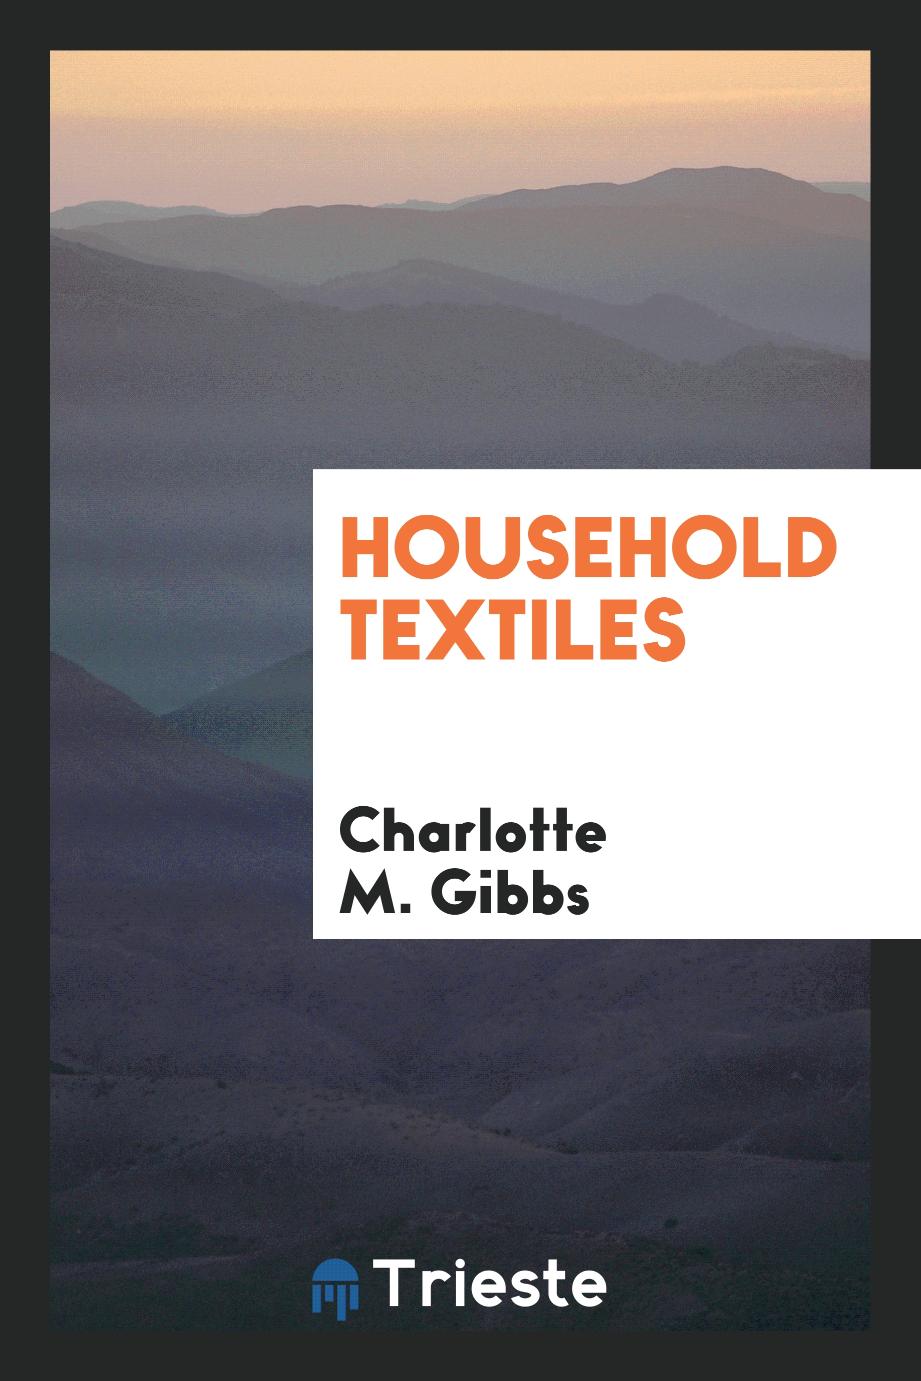 Household textiles